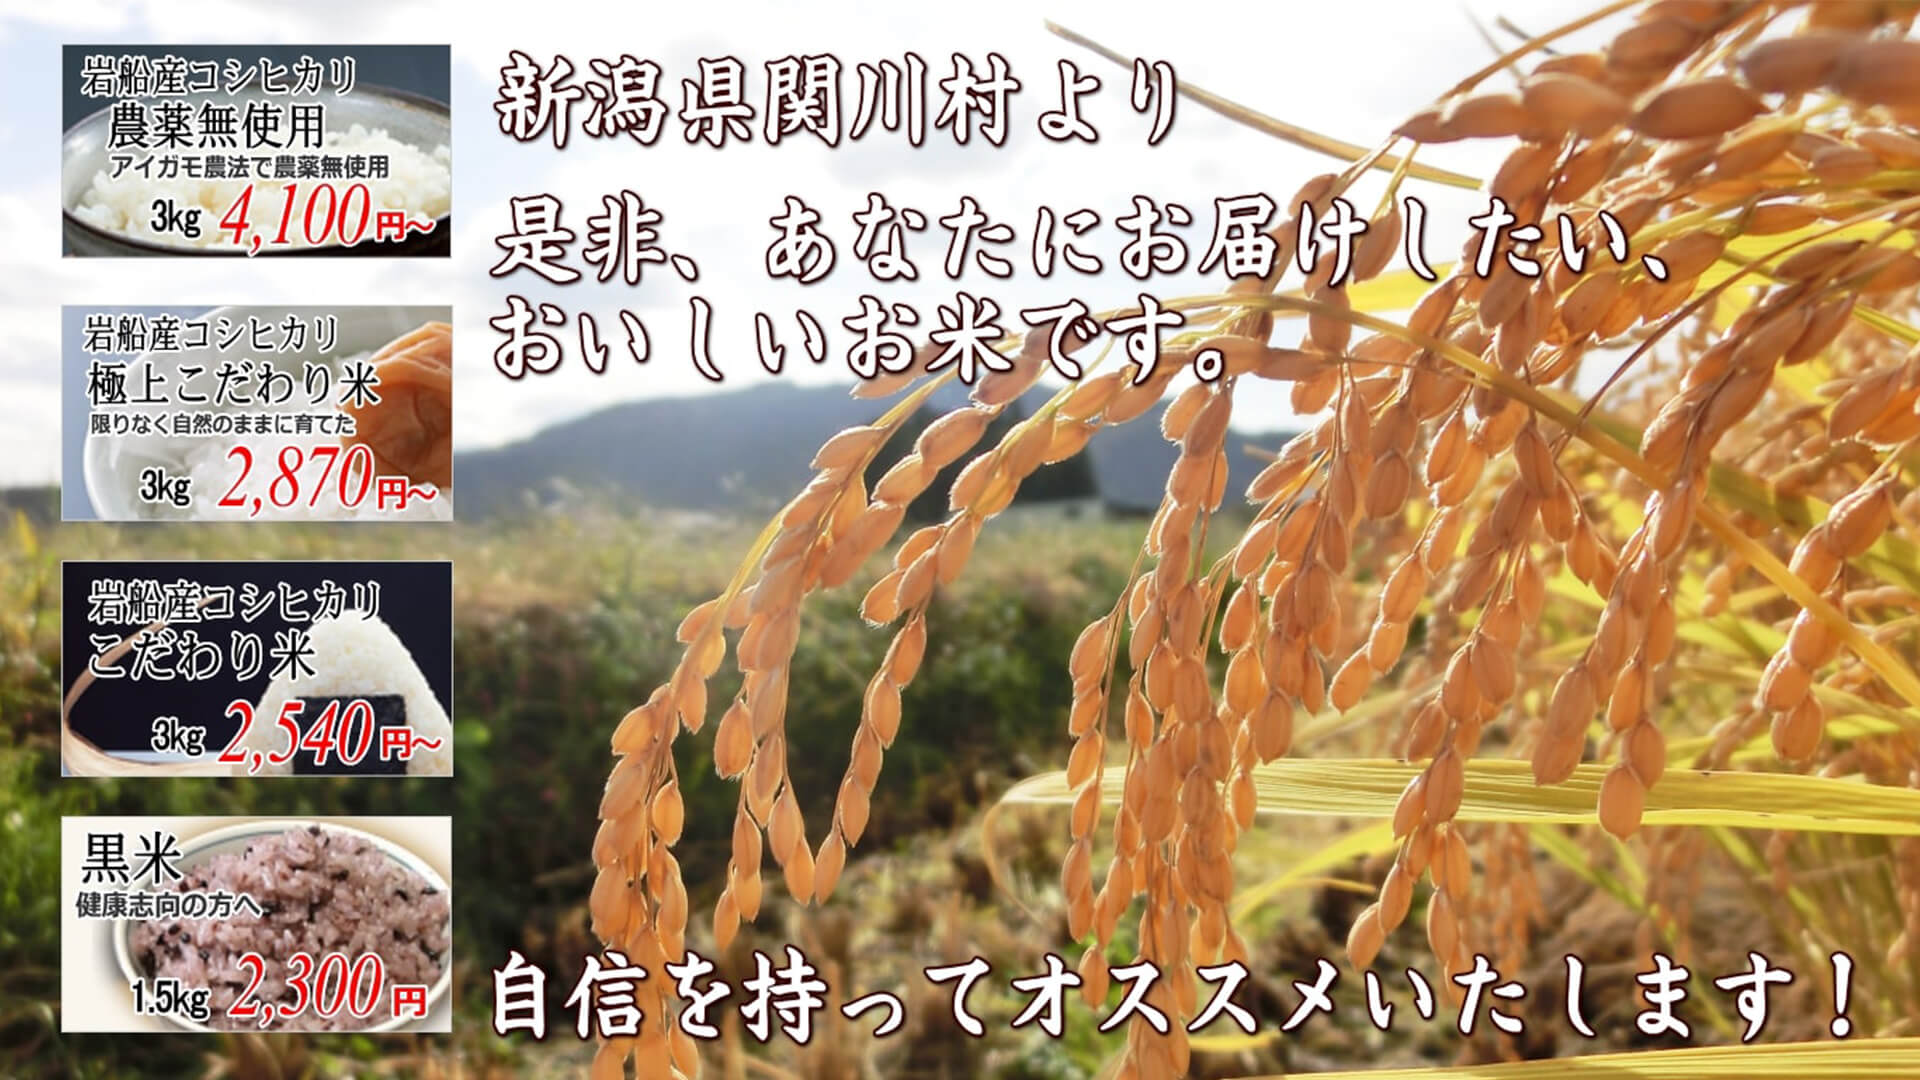 59%OFF!】 令和4年産米新潟県認証特別栽培 コシヒカリ 無洗米 25kg 5kg×5袋 ×9回 計 225kg 真空パック